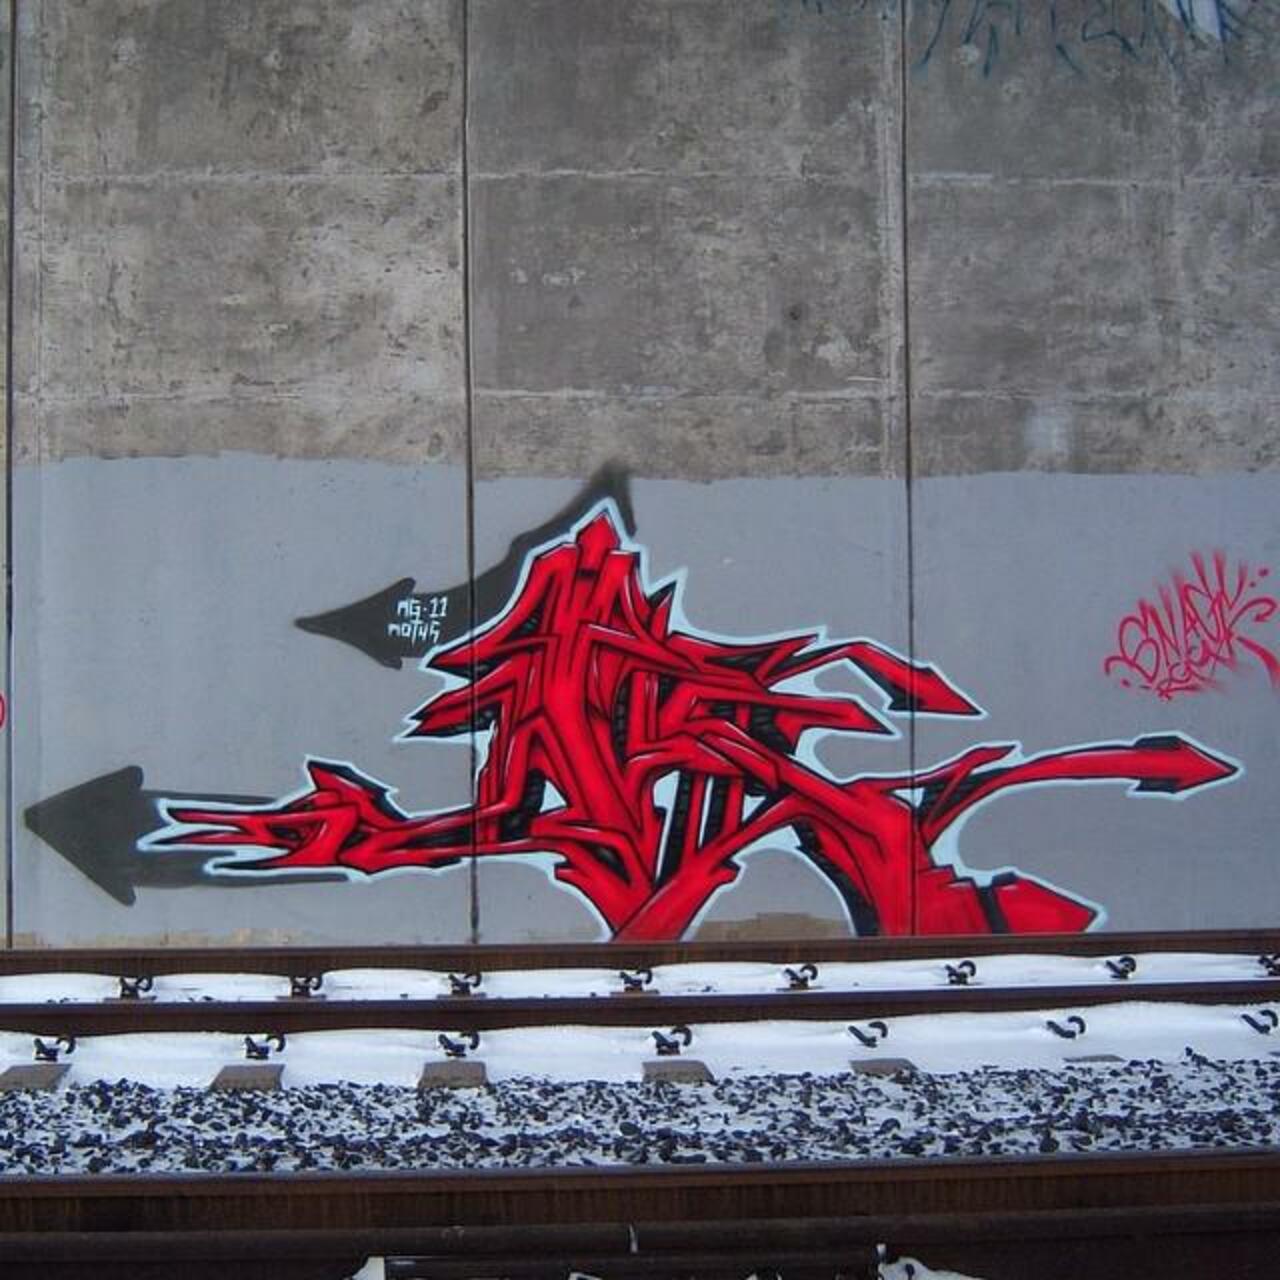 via #art.by.not.us "http://bit.ly/1DFQjXF" #graffiti #streetart http://t.co/vsFONPiMDY